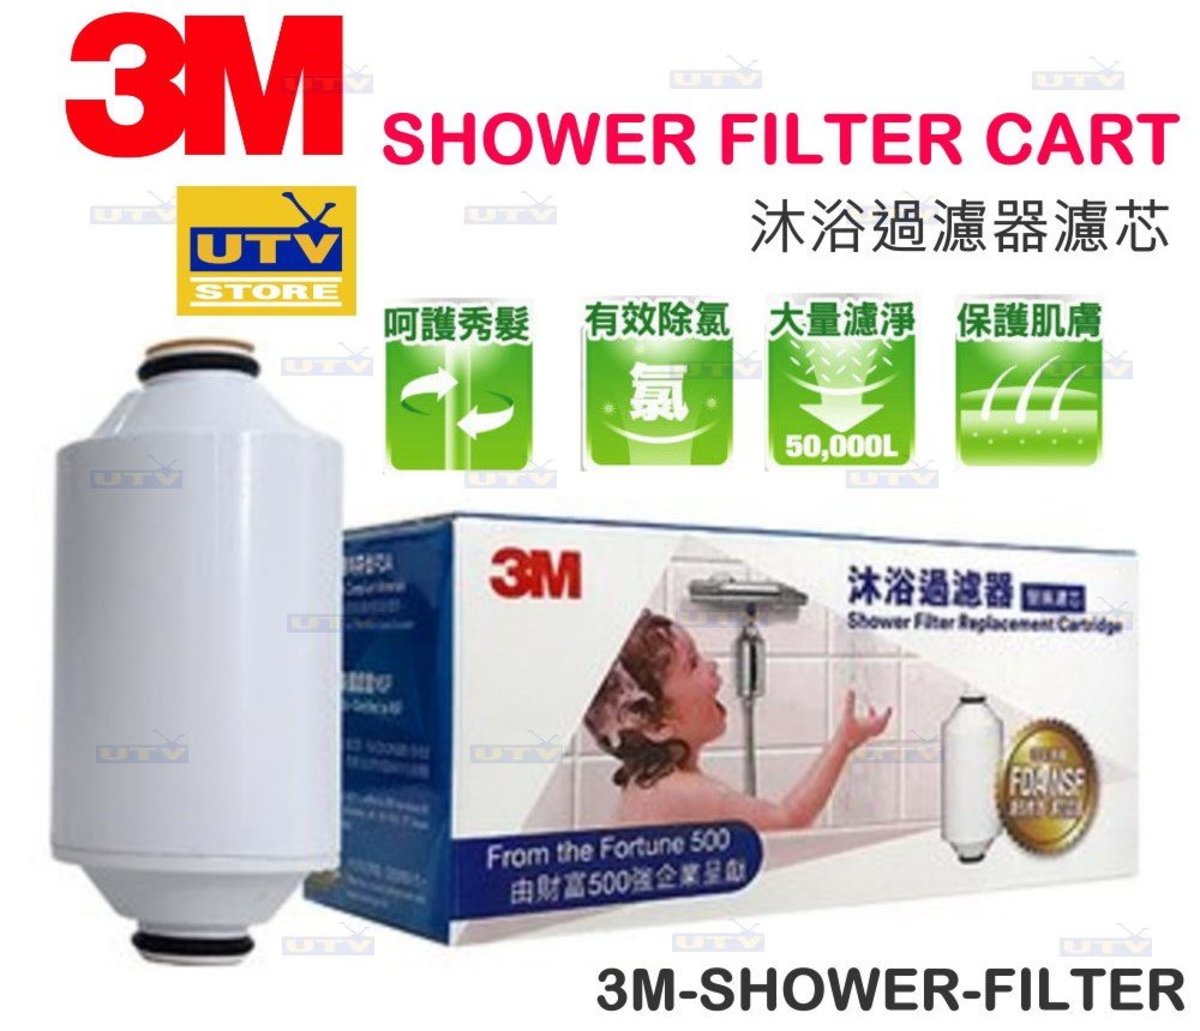 3M-SHOWER-FILTER 沐浴過濾器(替換濾芯)